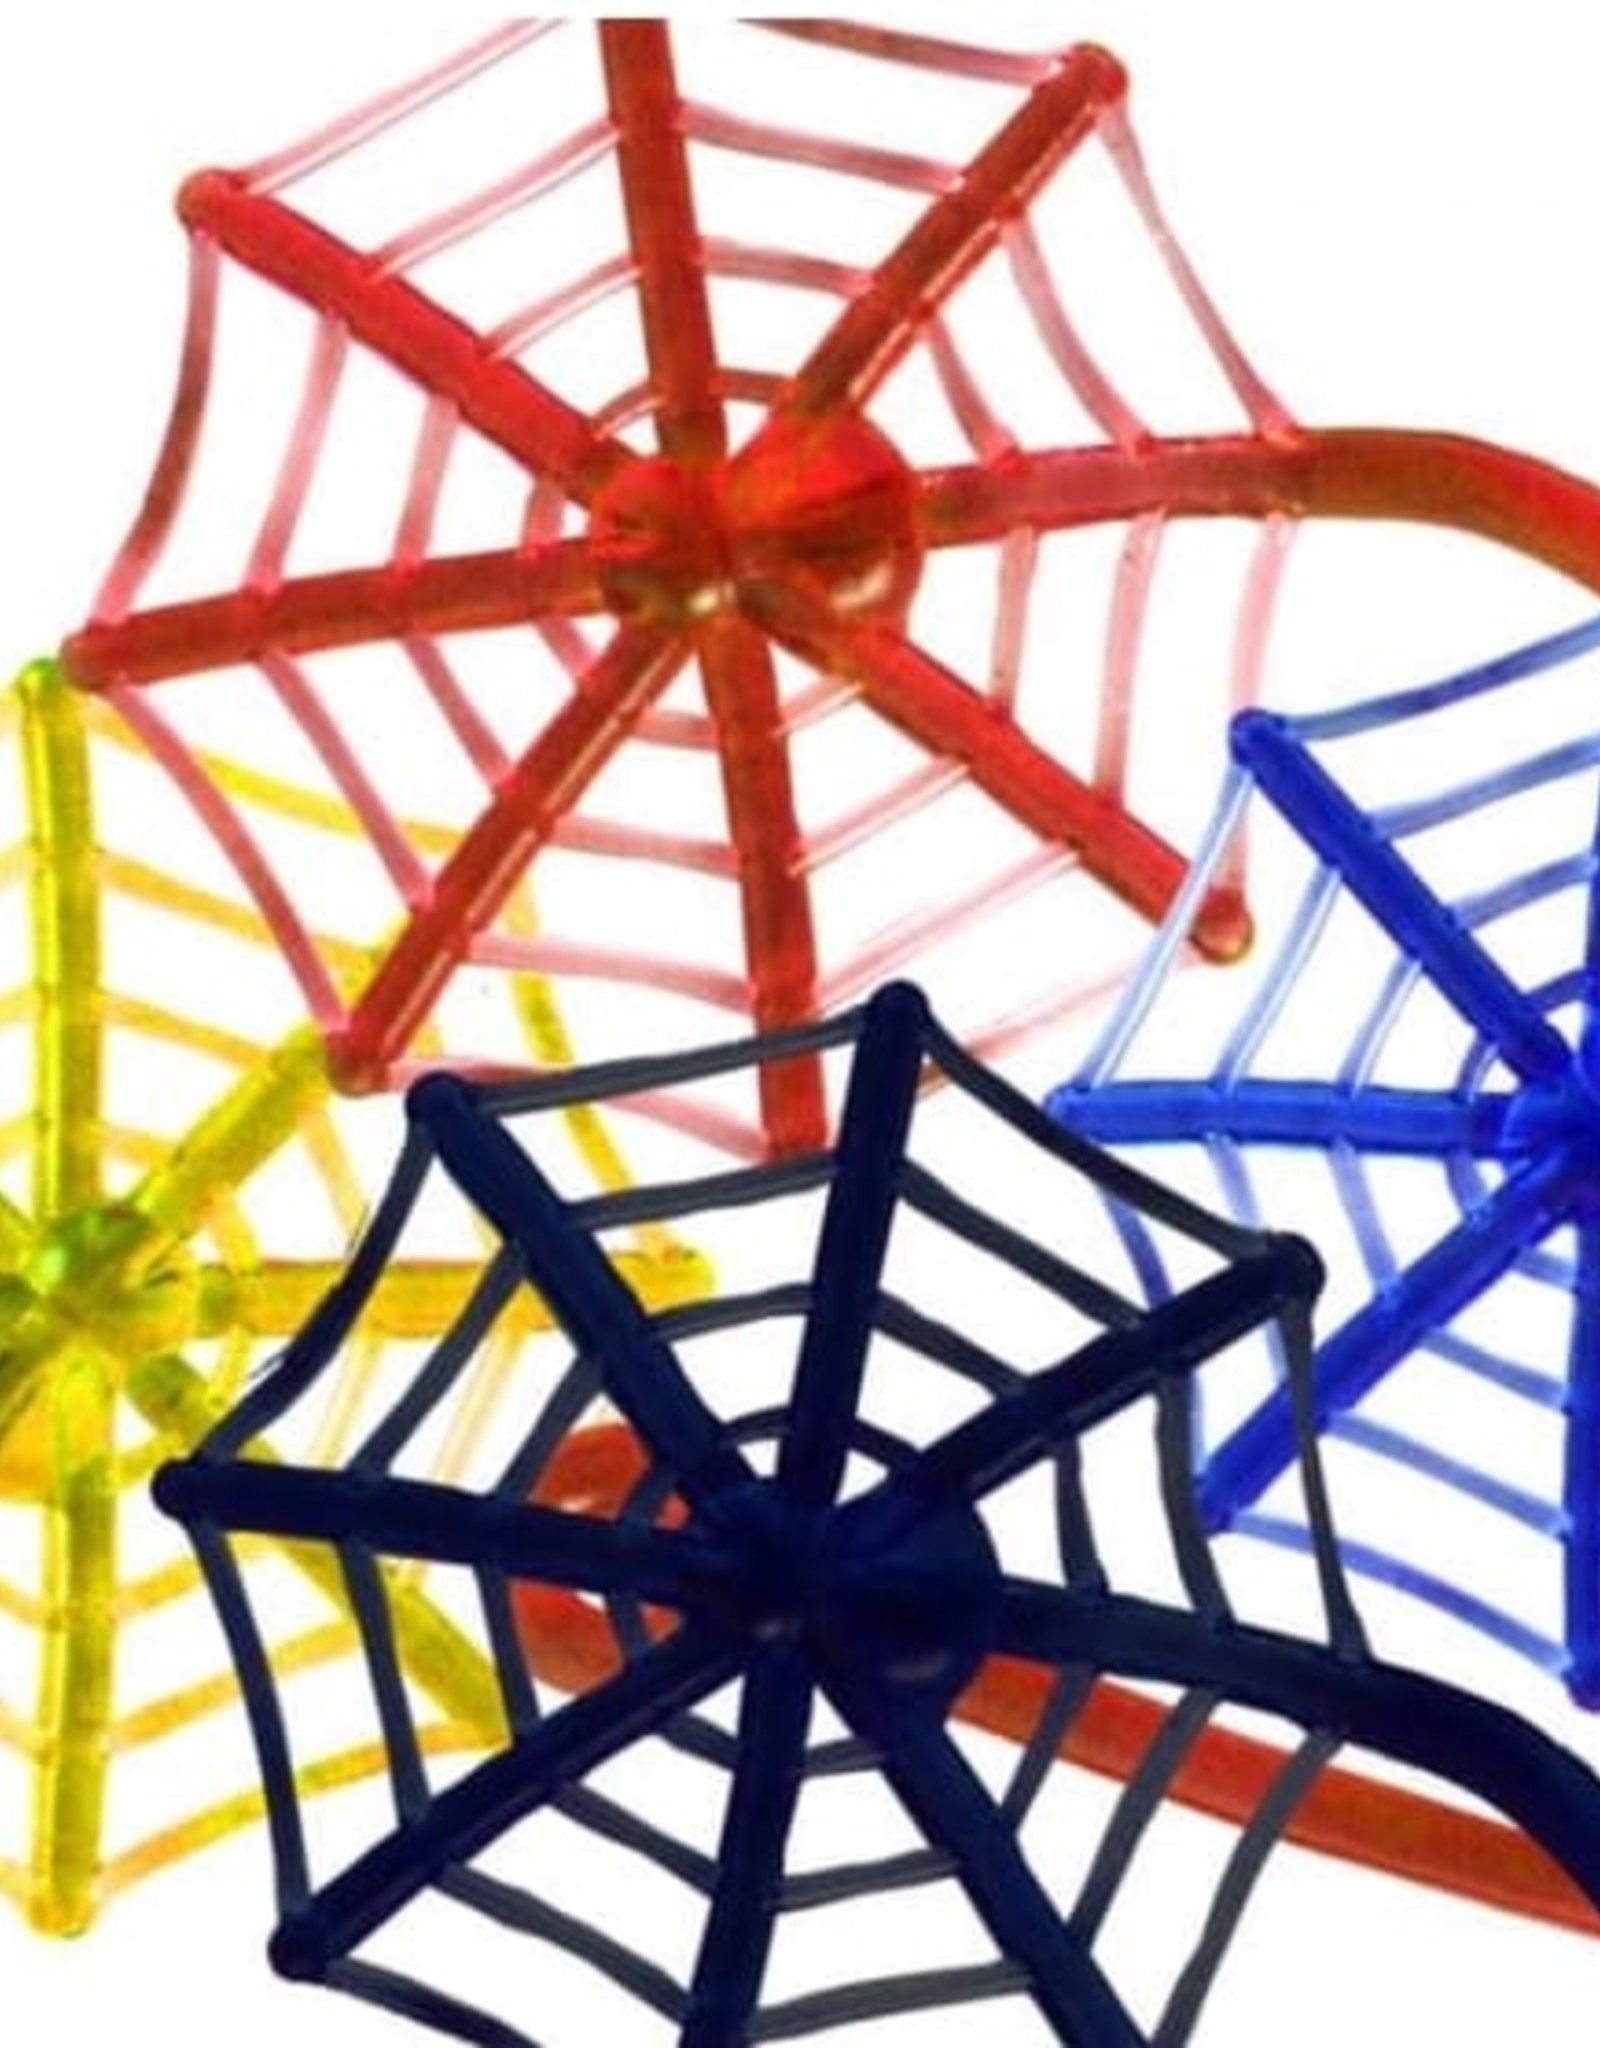 Sticky spinnen webben